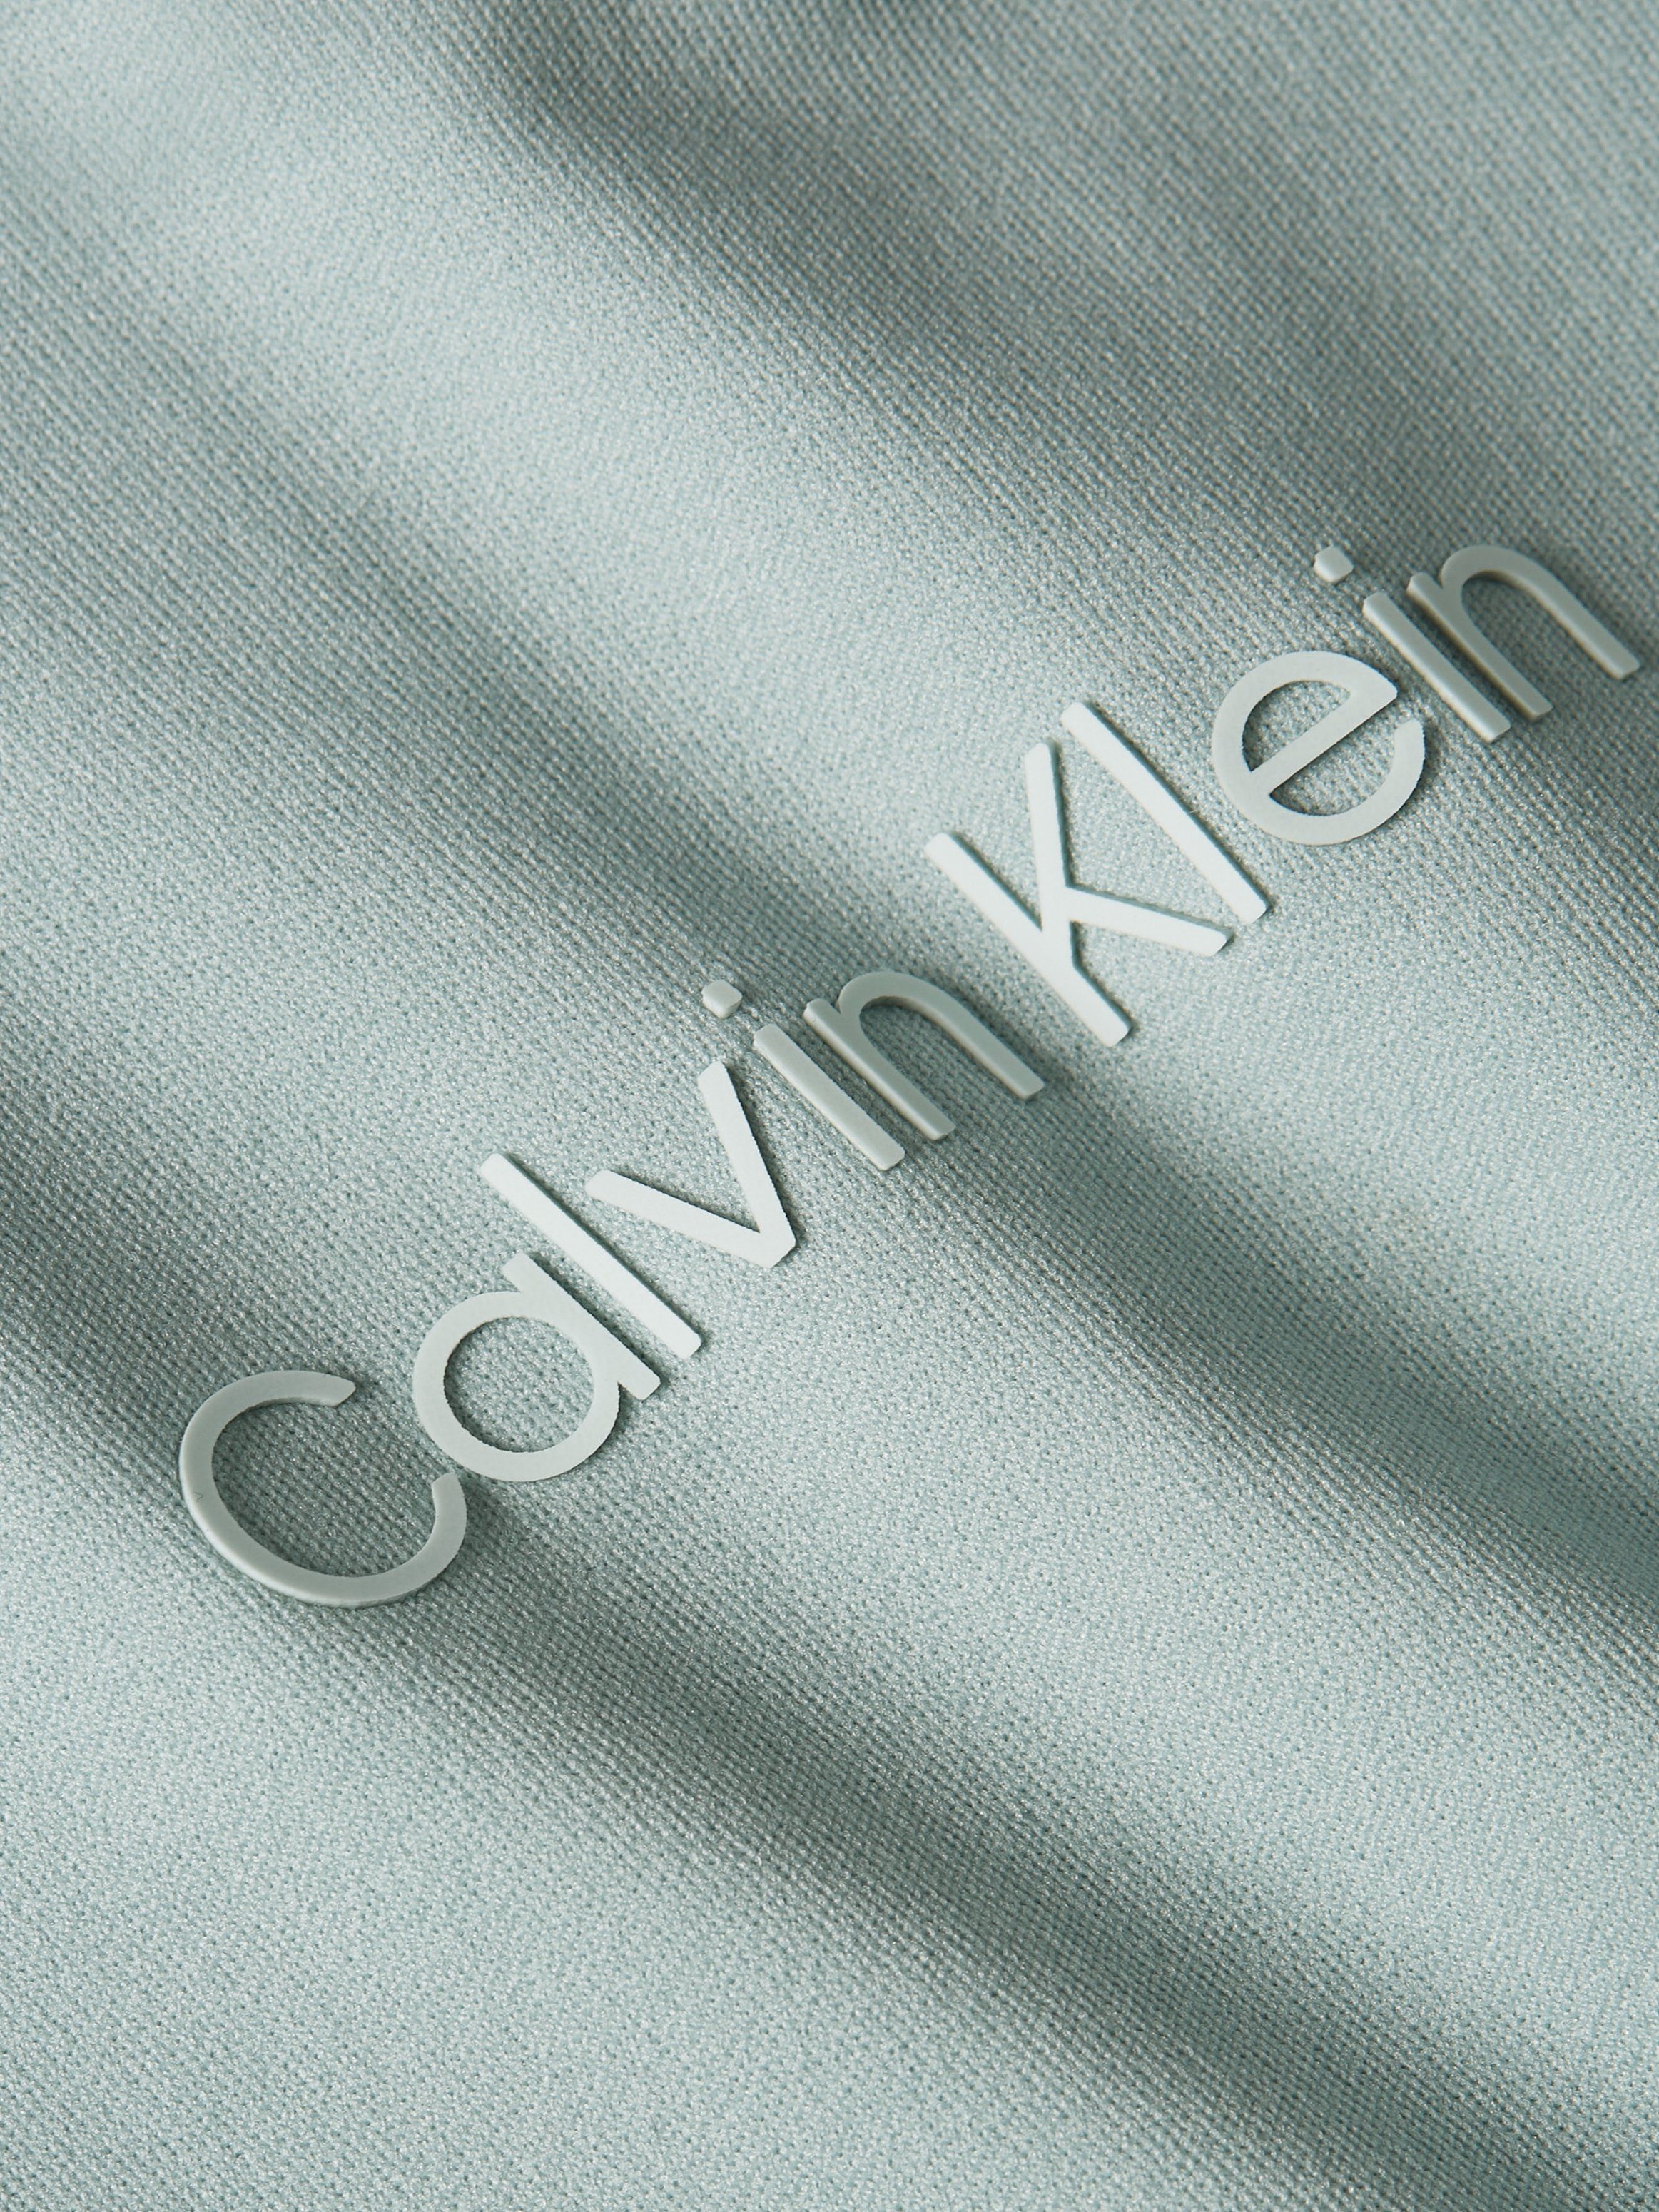 Calvin Klein Sport T-Shirt Mist Gray